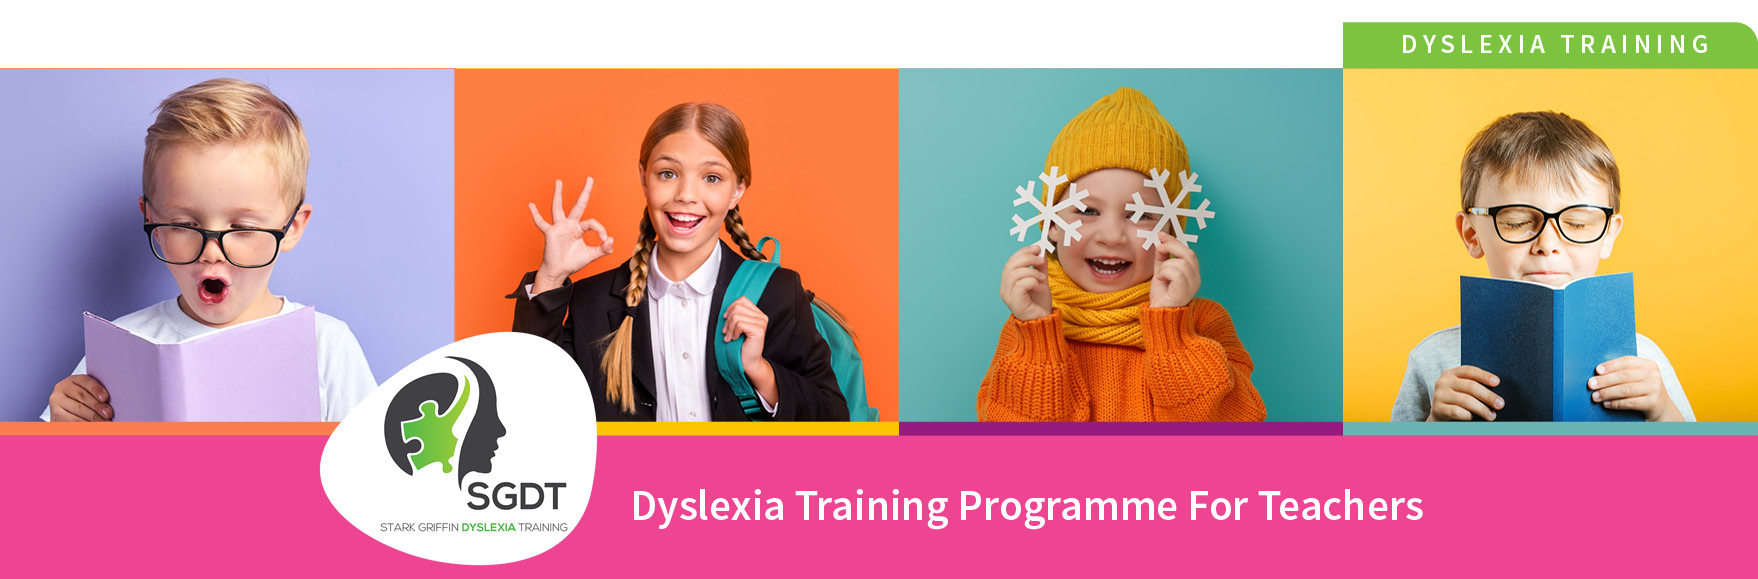 Dyslexia Training for Teachers